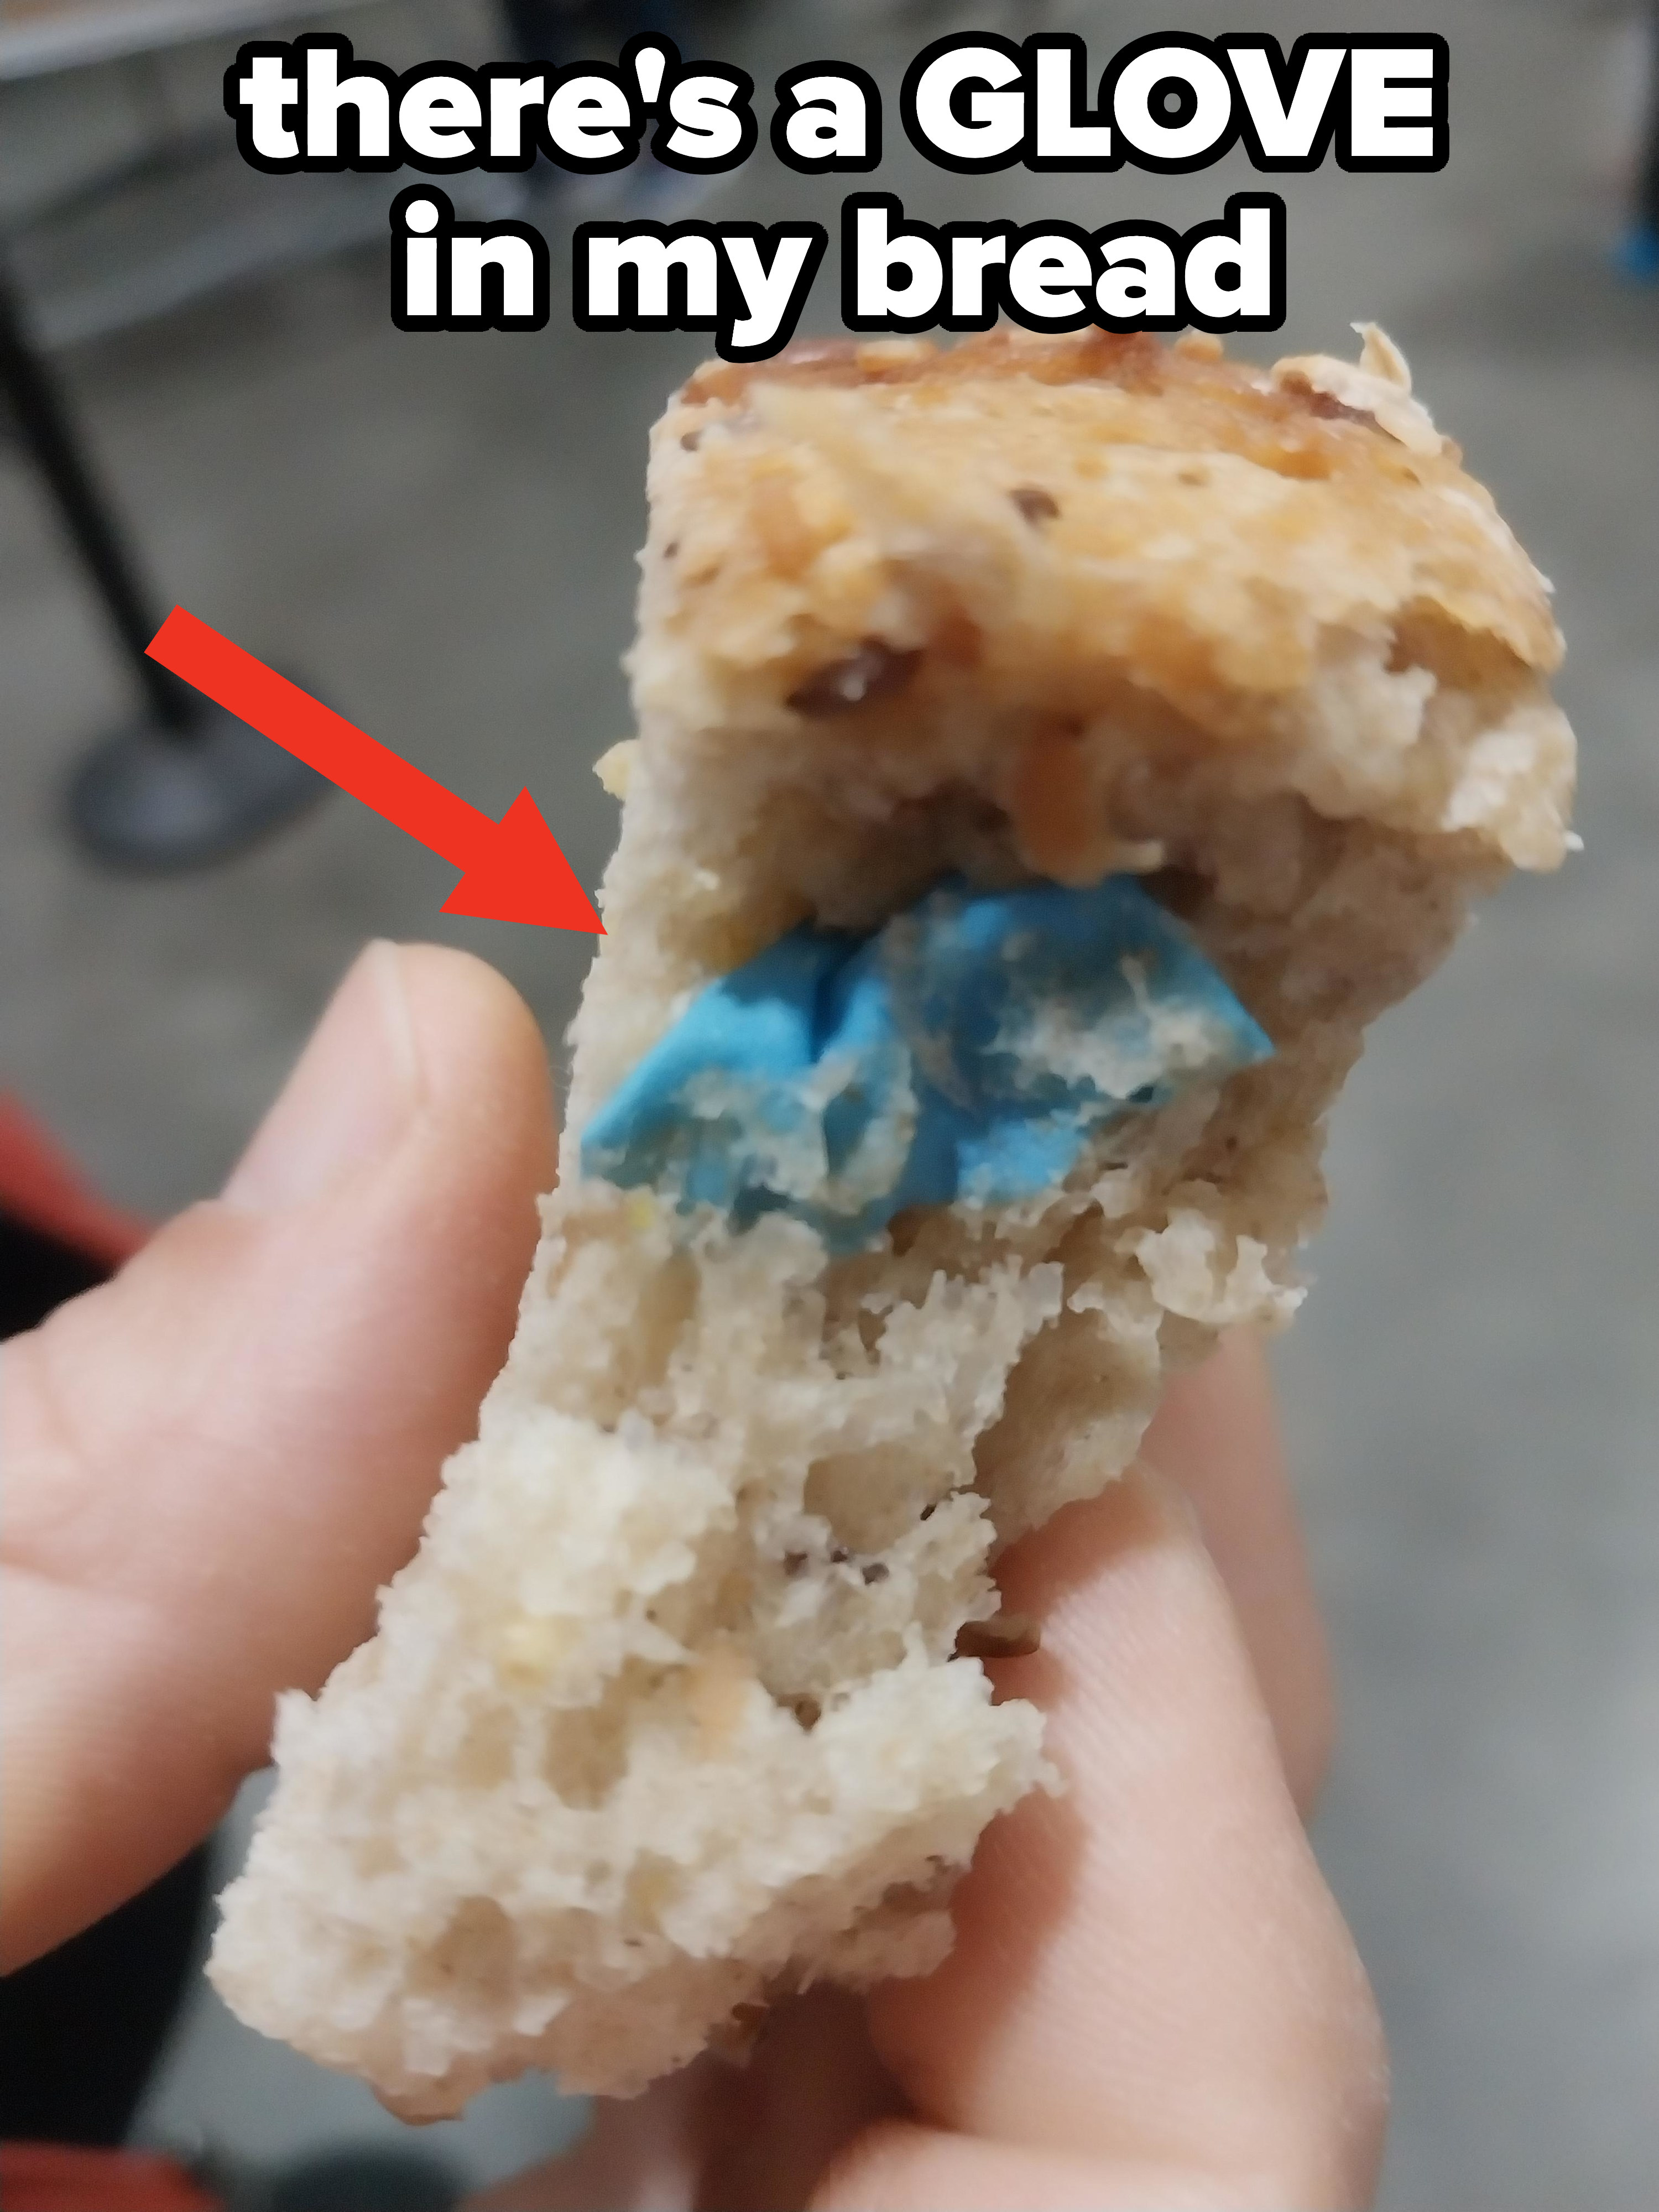 A blue medical glove inside a piece of bread